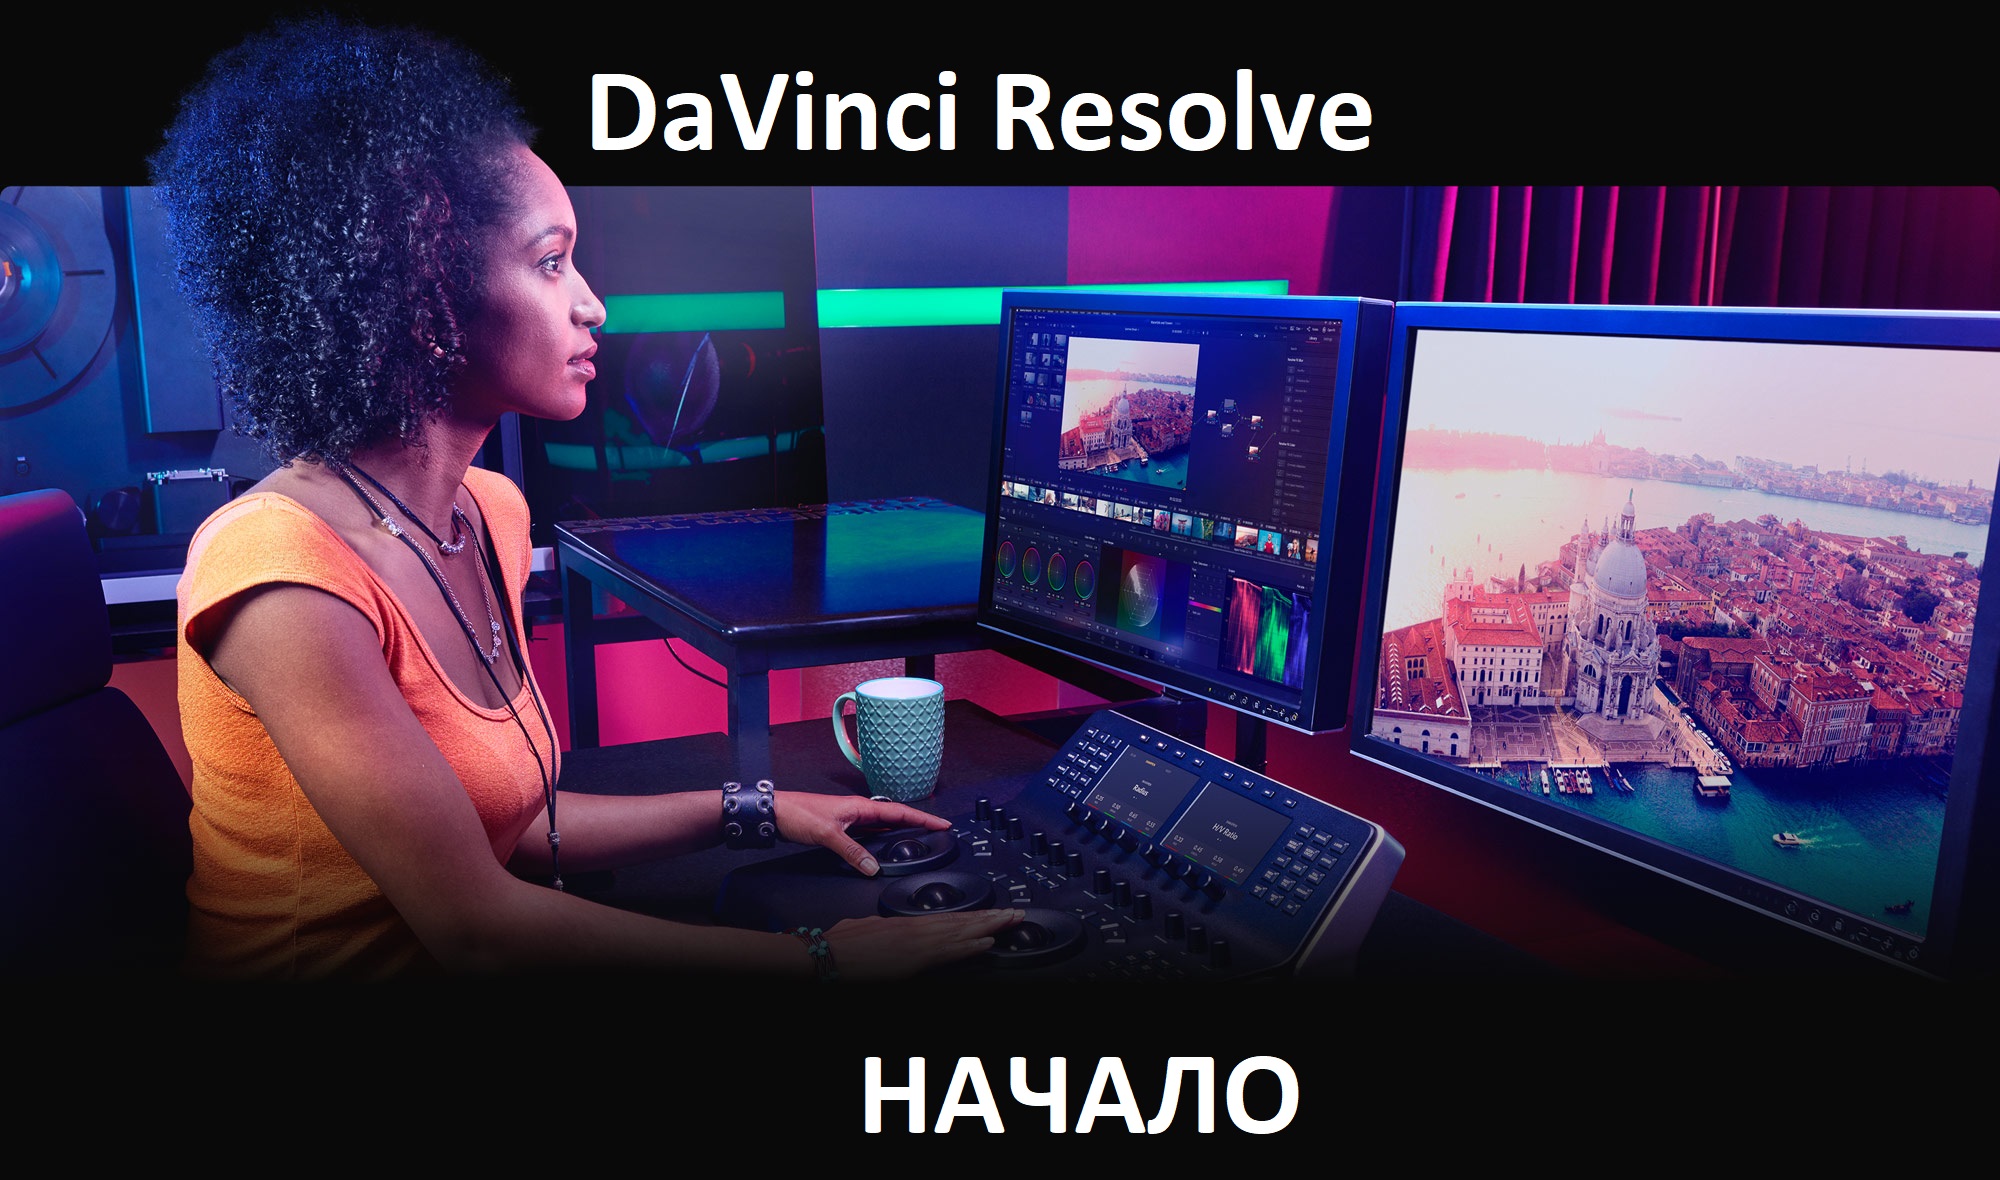 Davinci resolve studio 19. Blackmagic Design DAVINCI resolve Studio 18. DAVINCI resolve 17. Blackmagic Design DAVINCI resolve Studio.